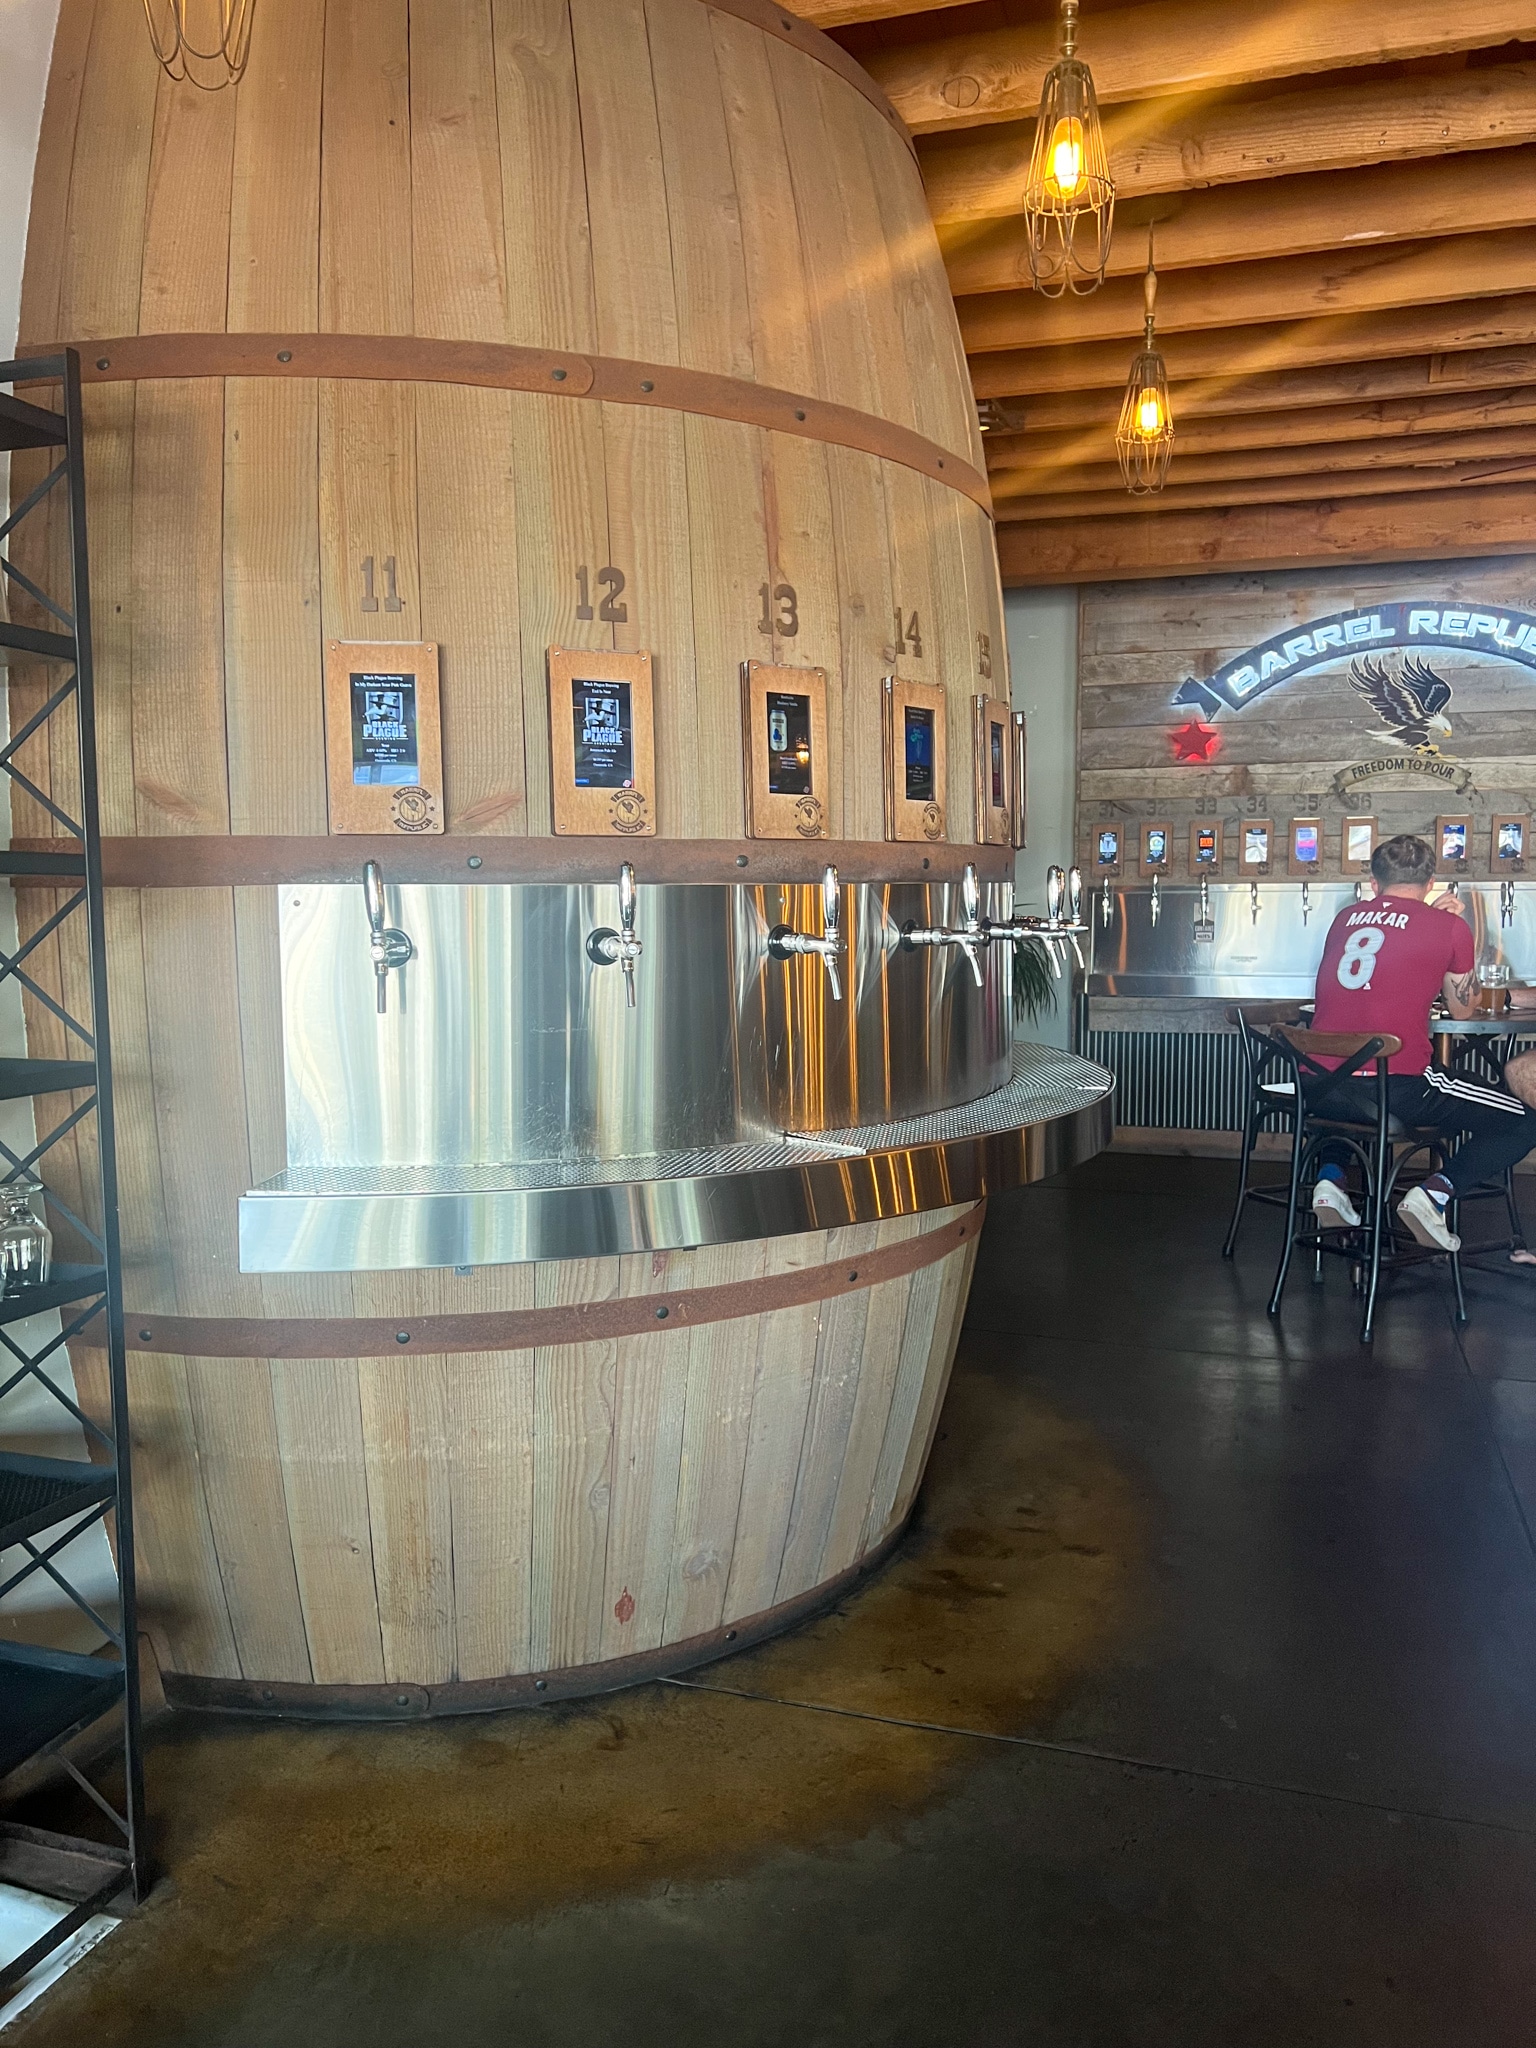 Breweries in Carlsbad, CA - Barrel Republic